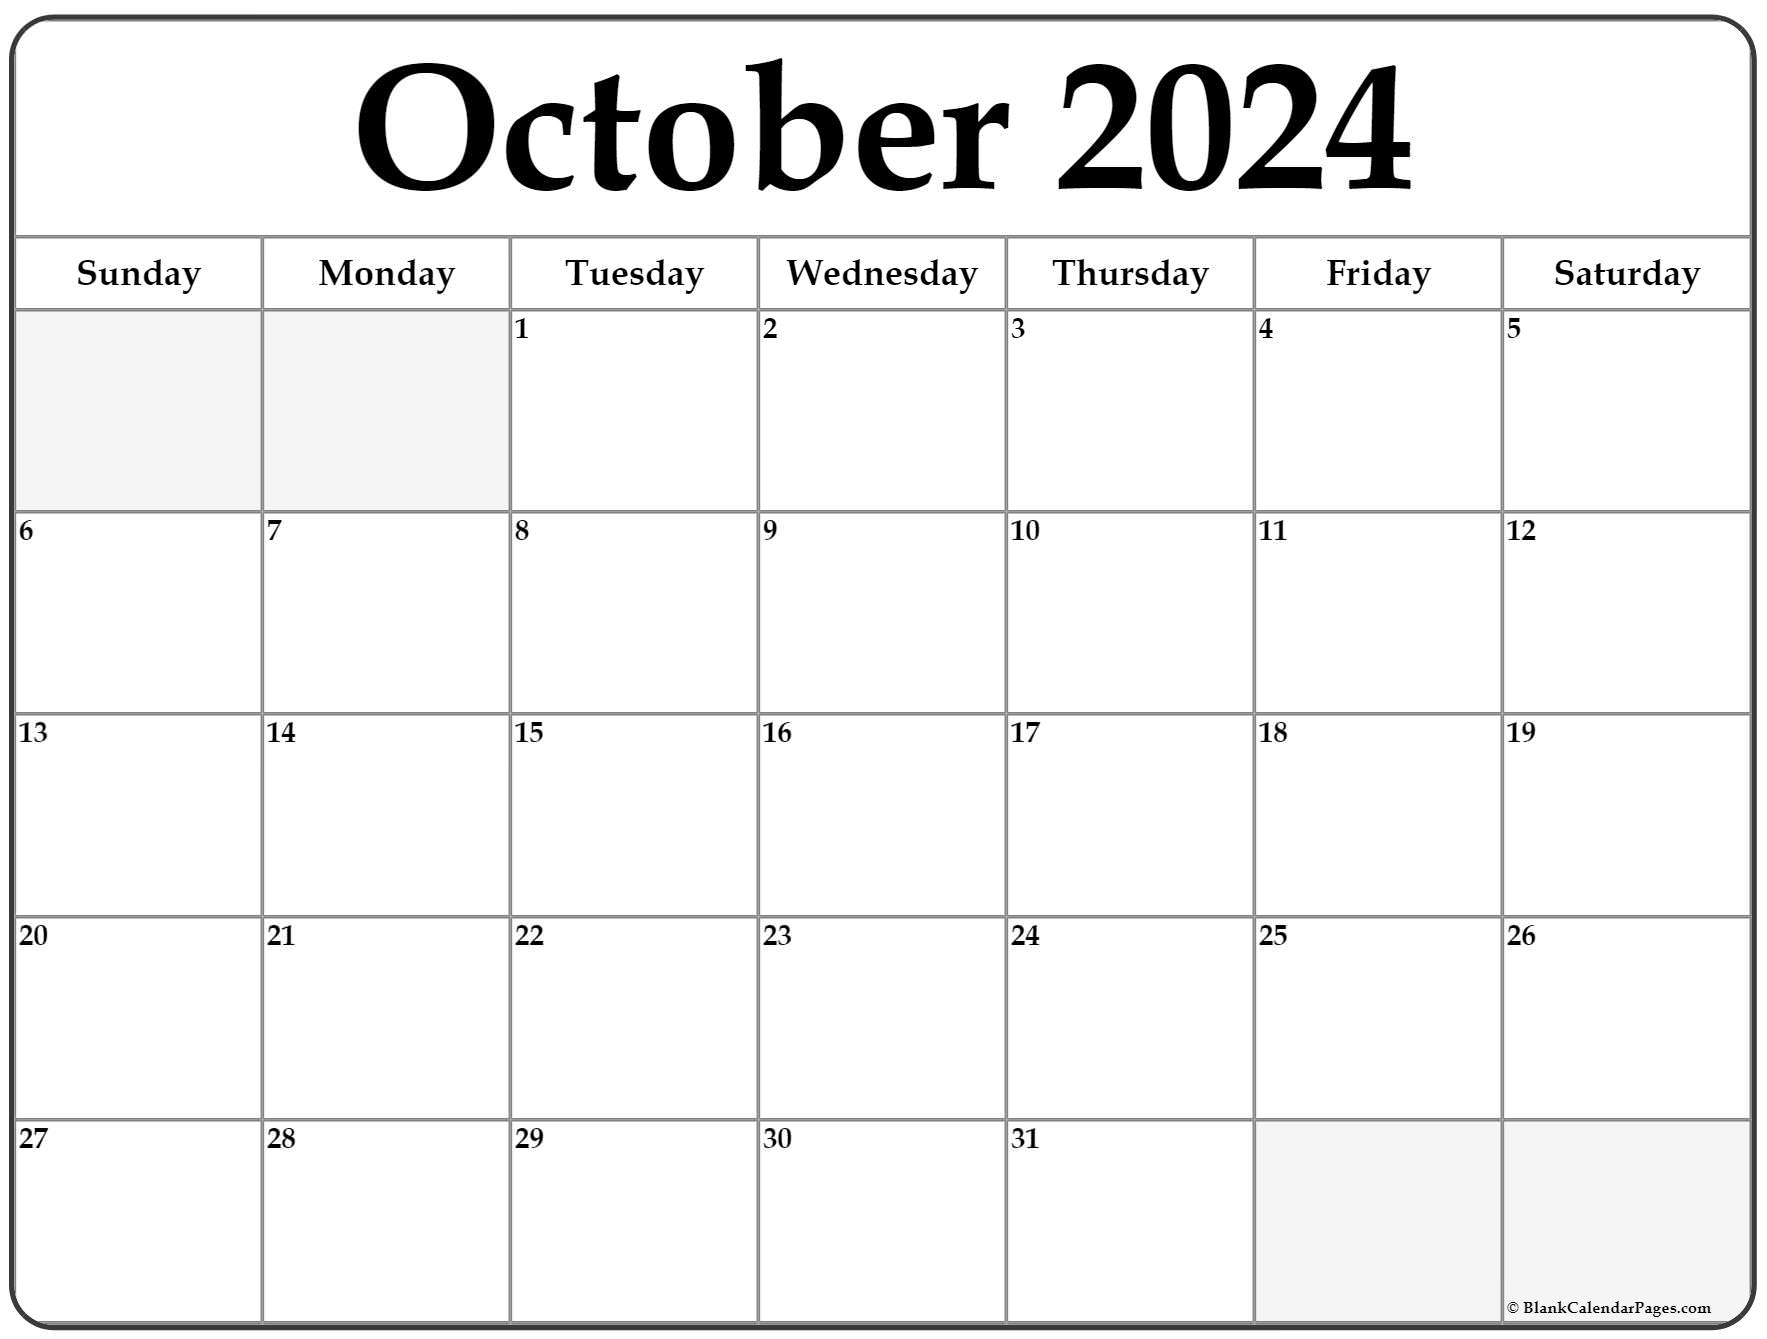 October 2024 Calendar Pdf Ula Lianna